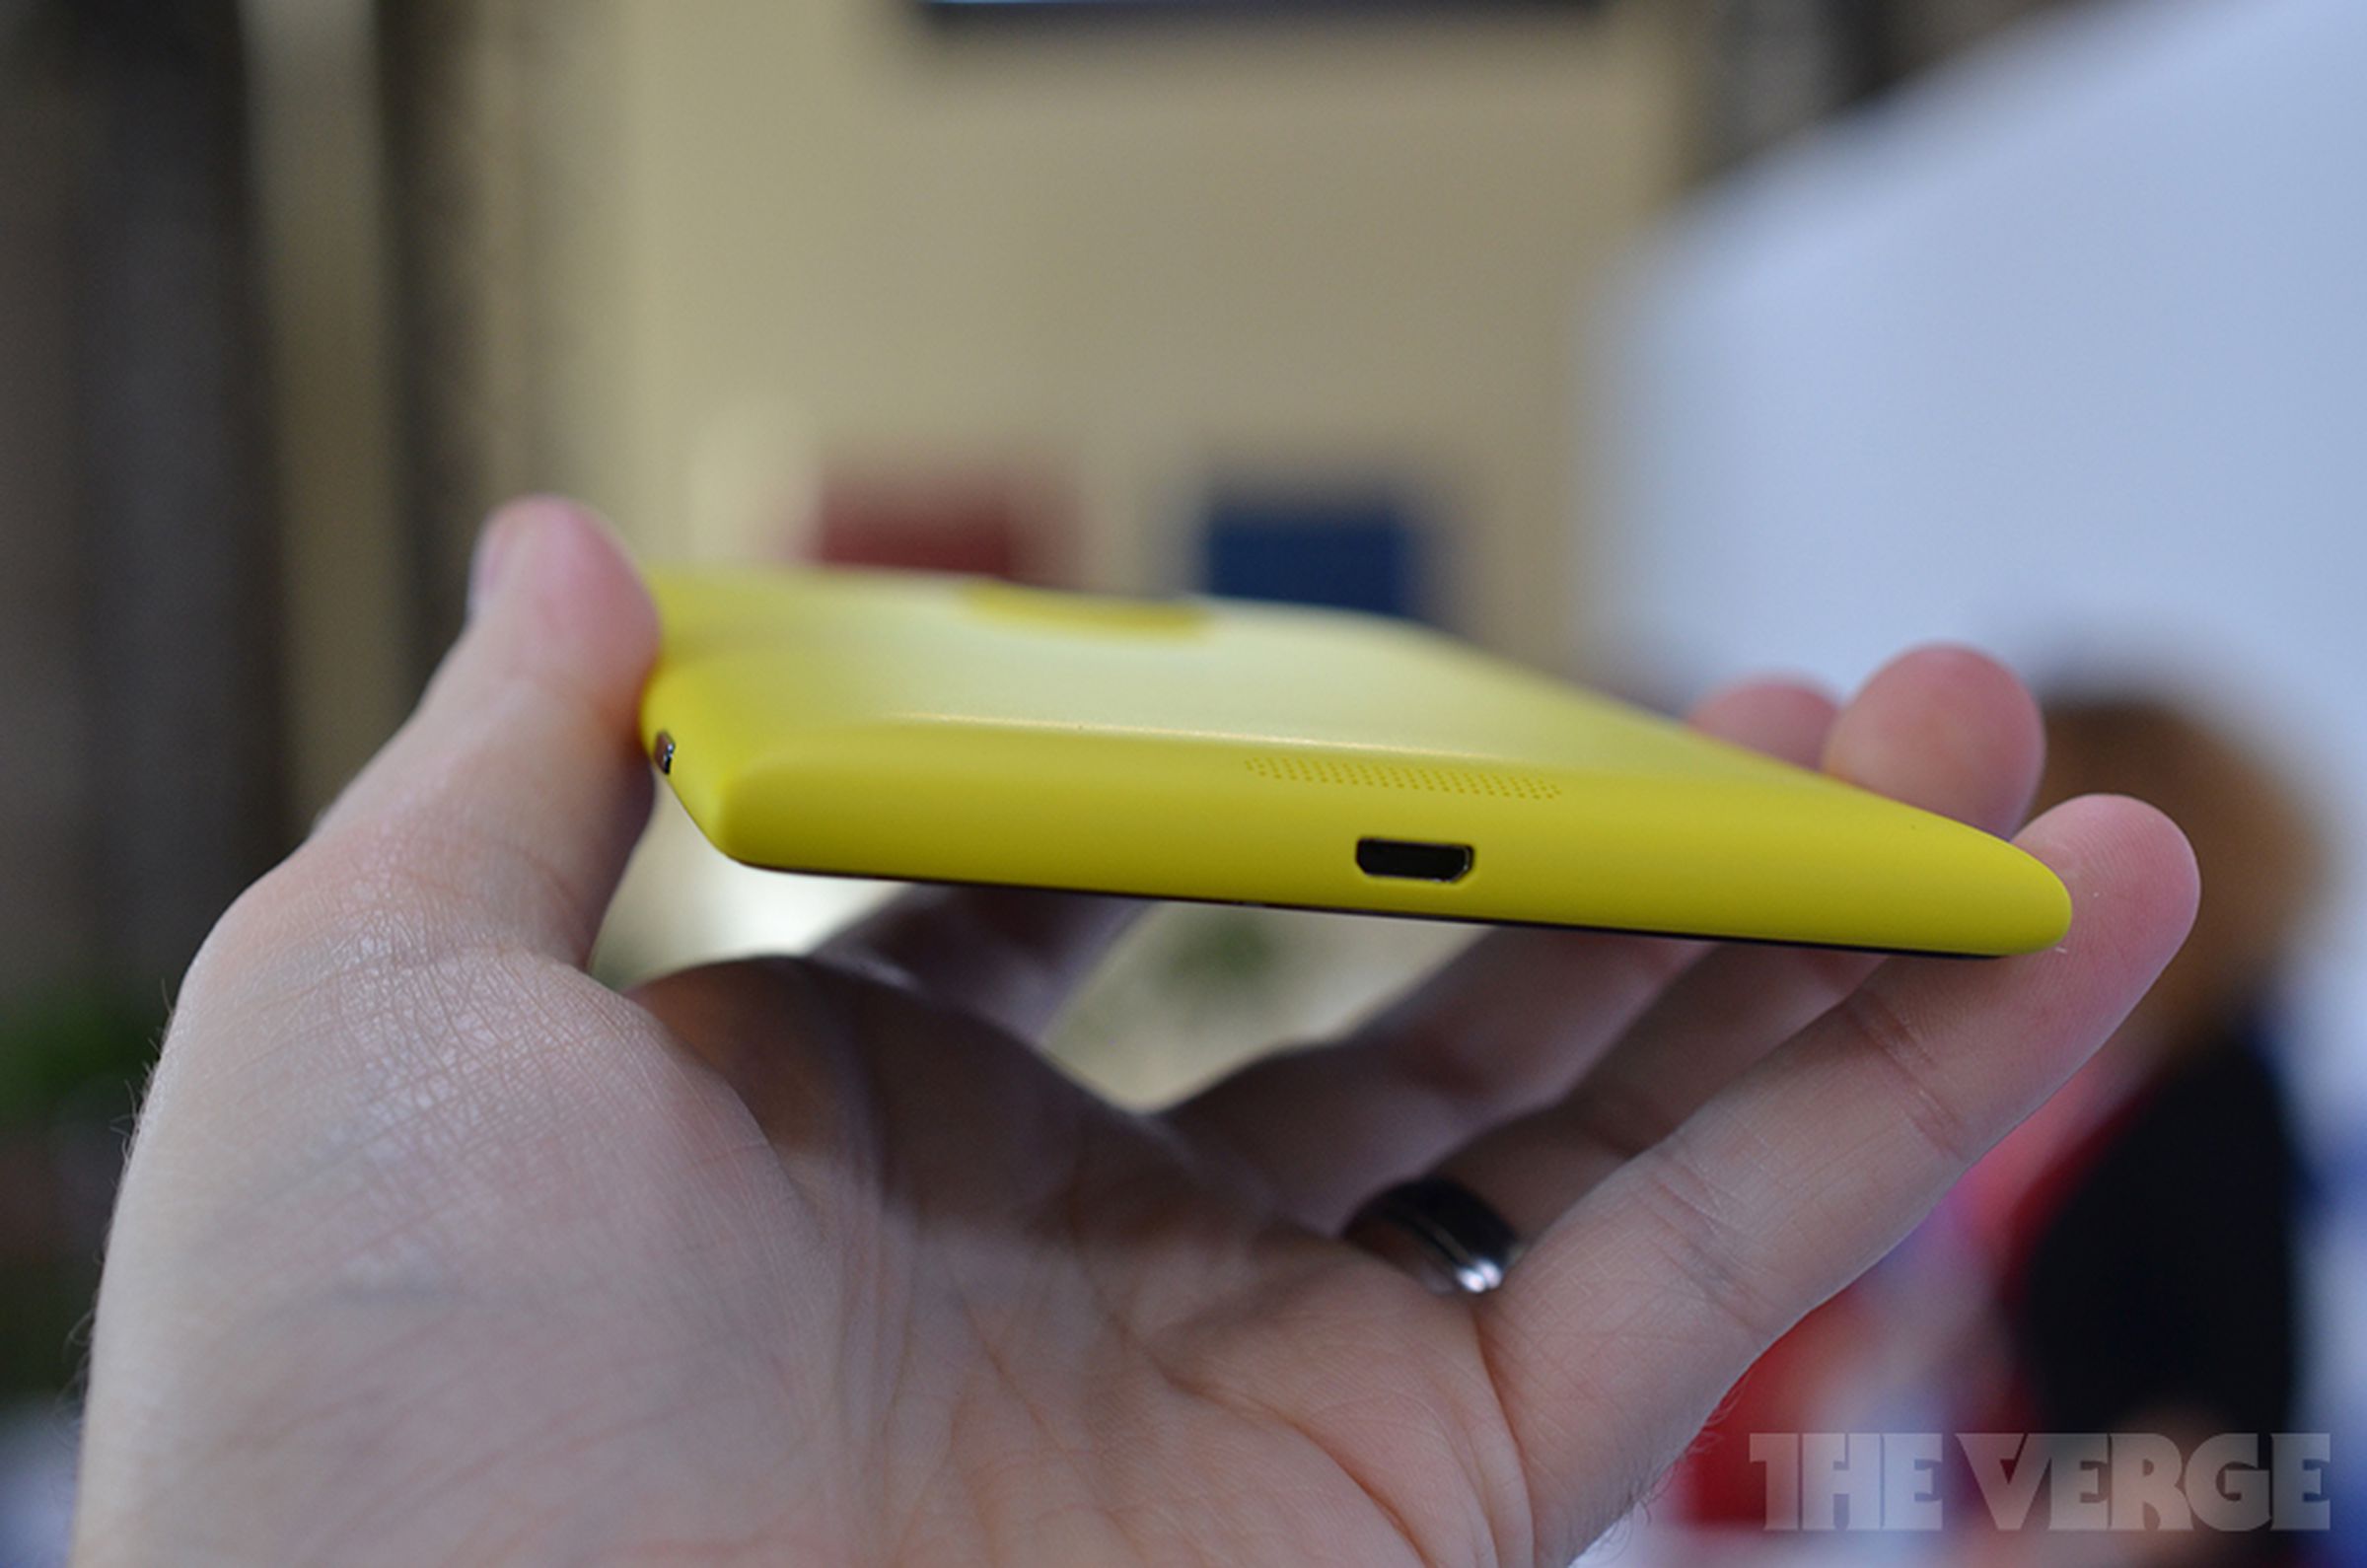 Nokia Lumia 1520 hands-on photos